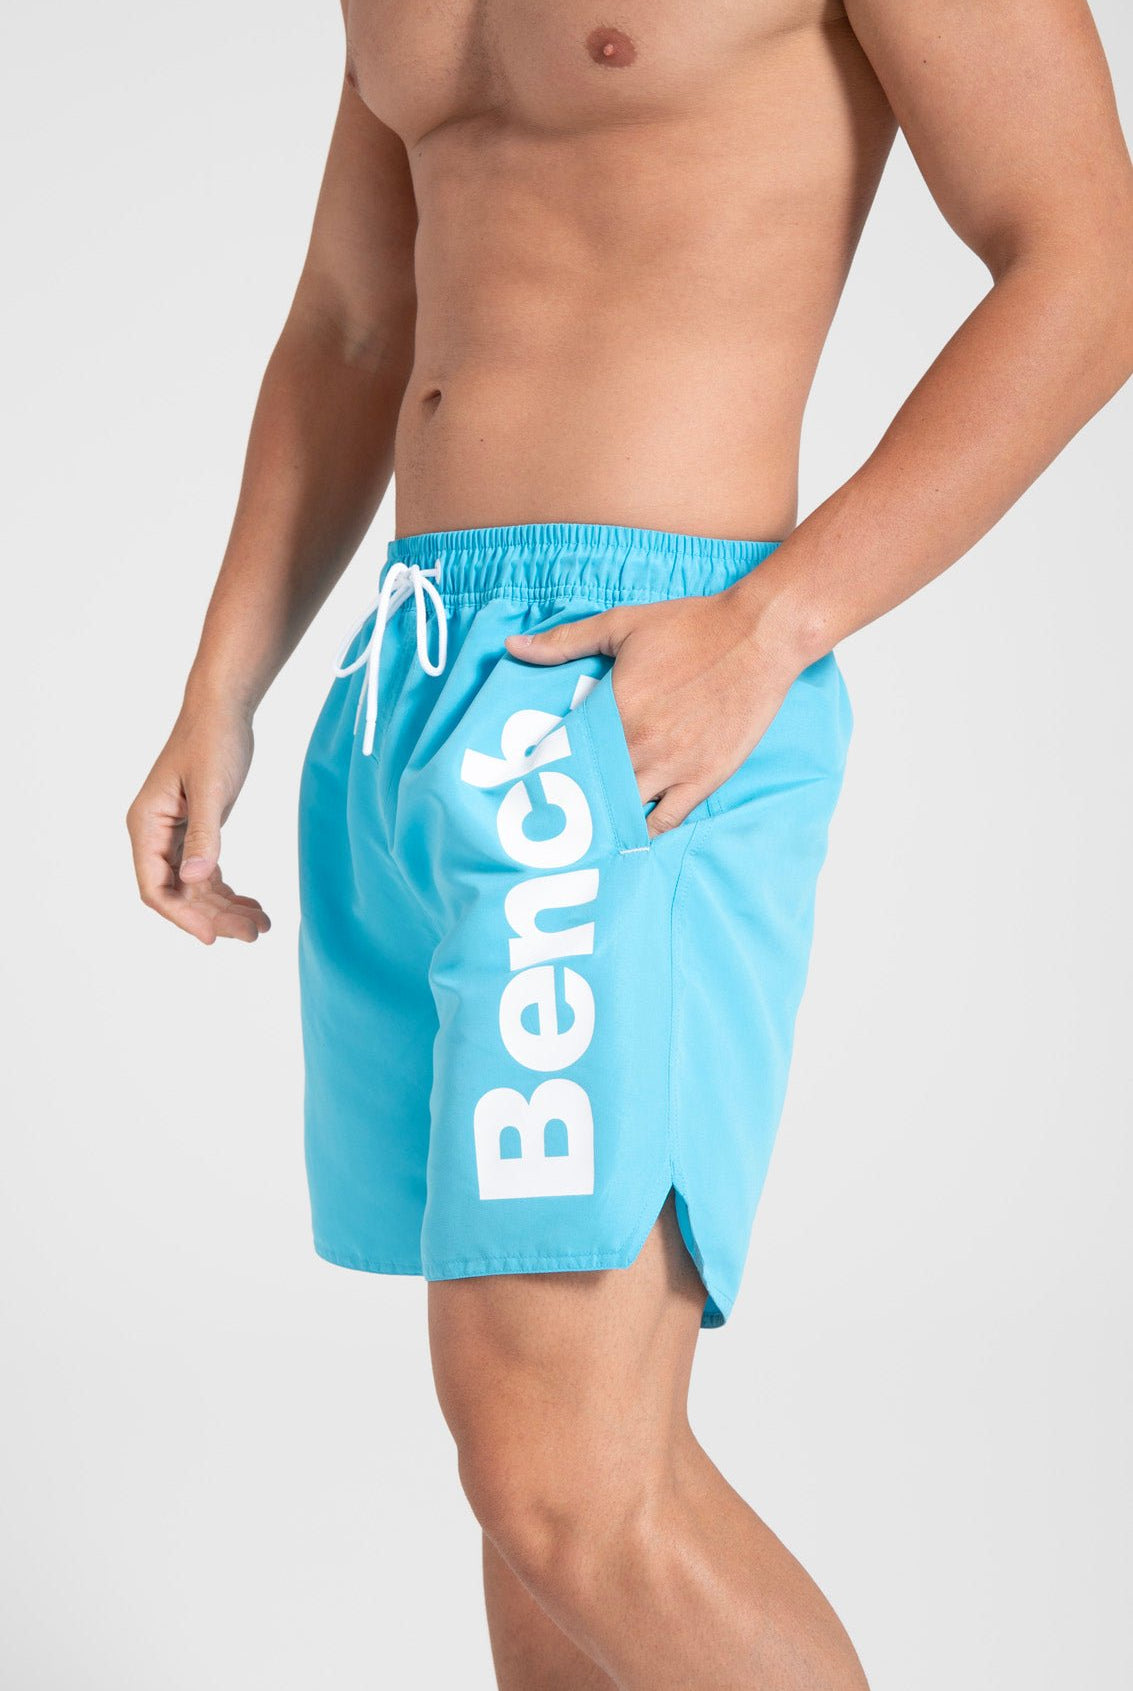 Mens 'TAHITI' Swim Shorts - BRIGHT BLUE - Shop at www.Bench.co.uk #LoveMyHood